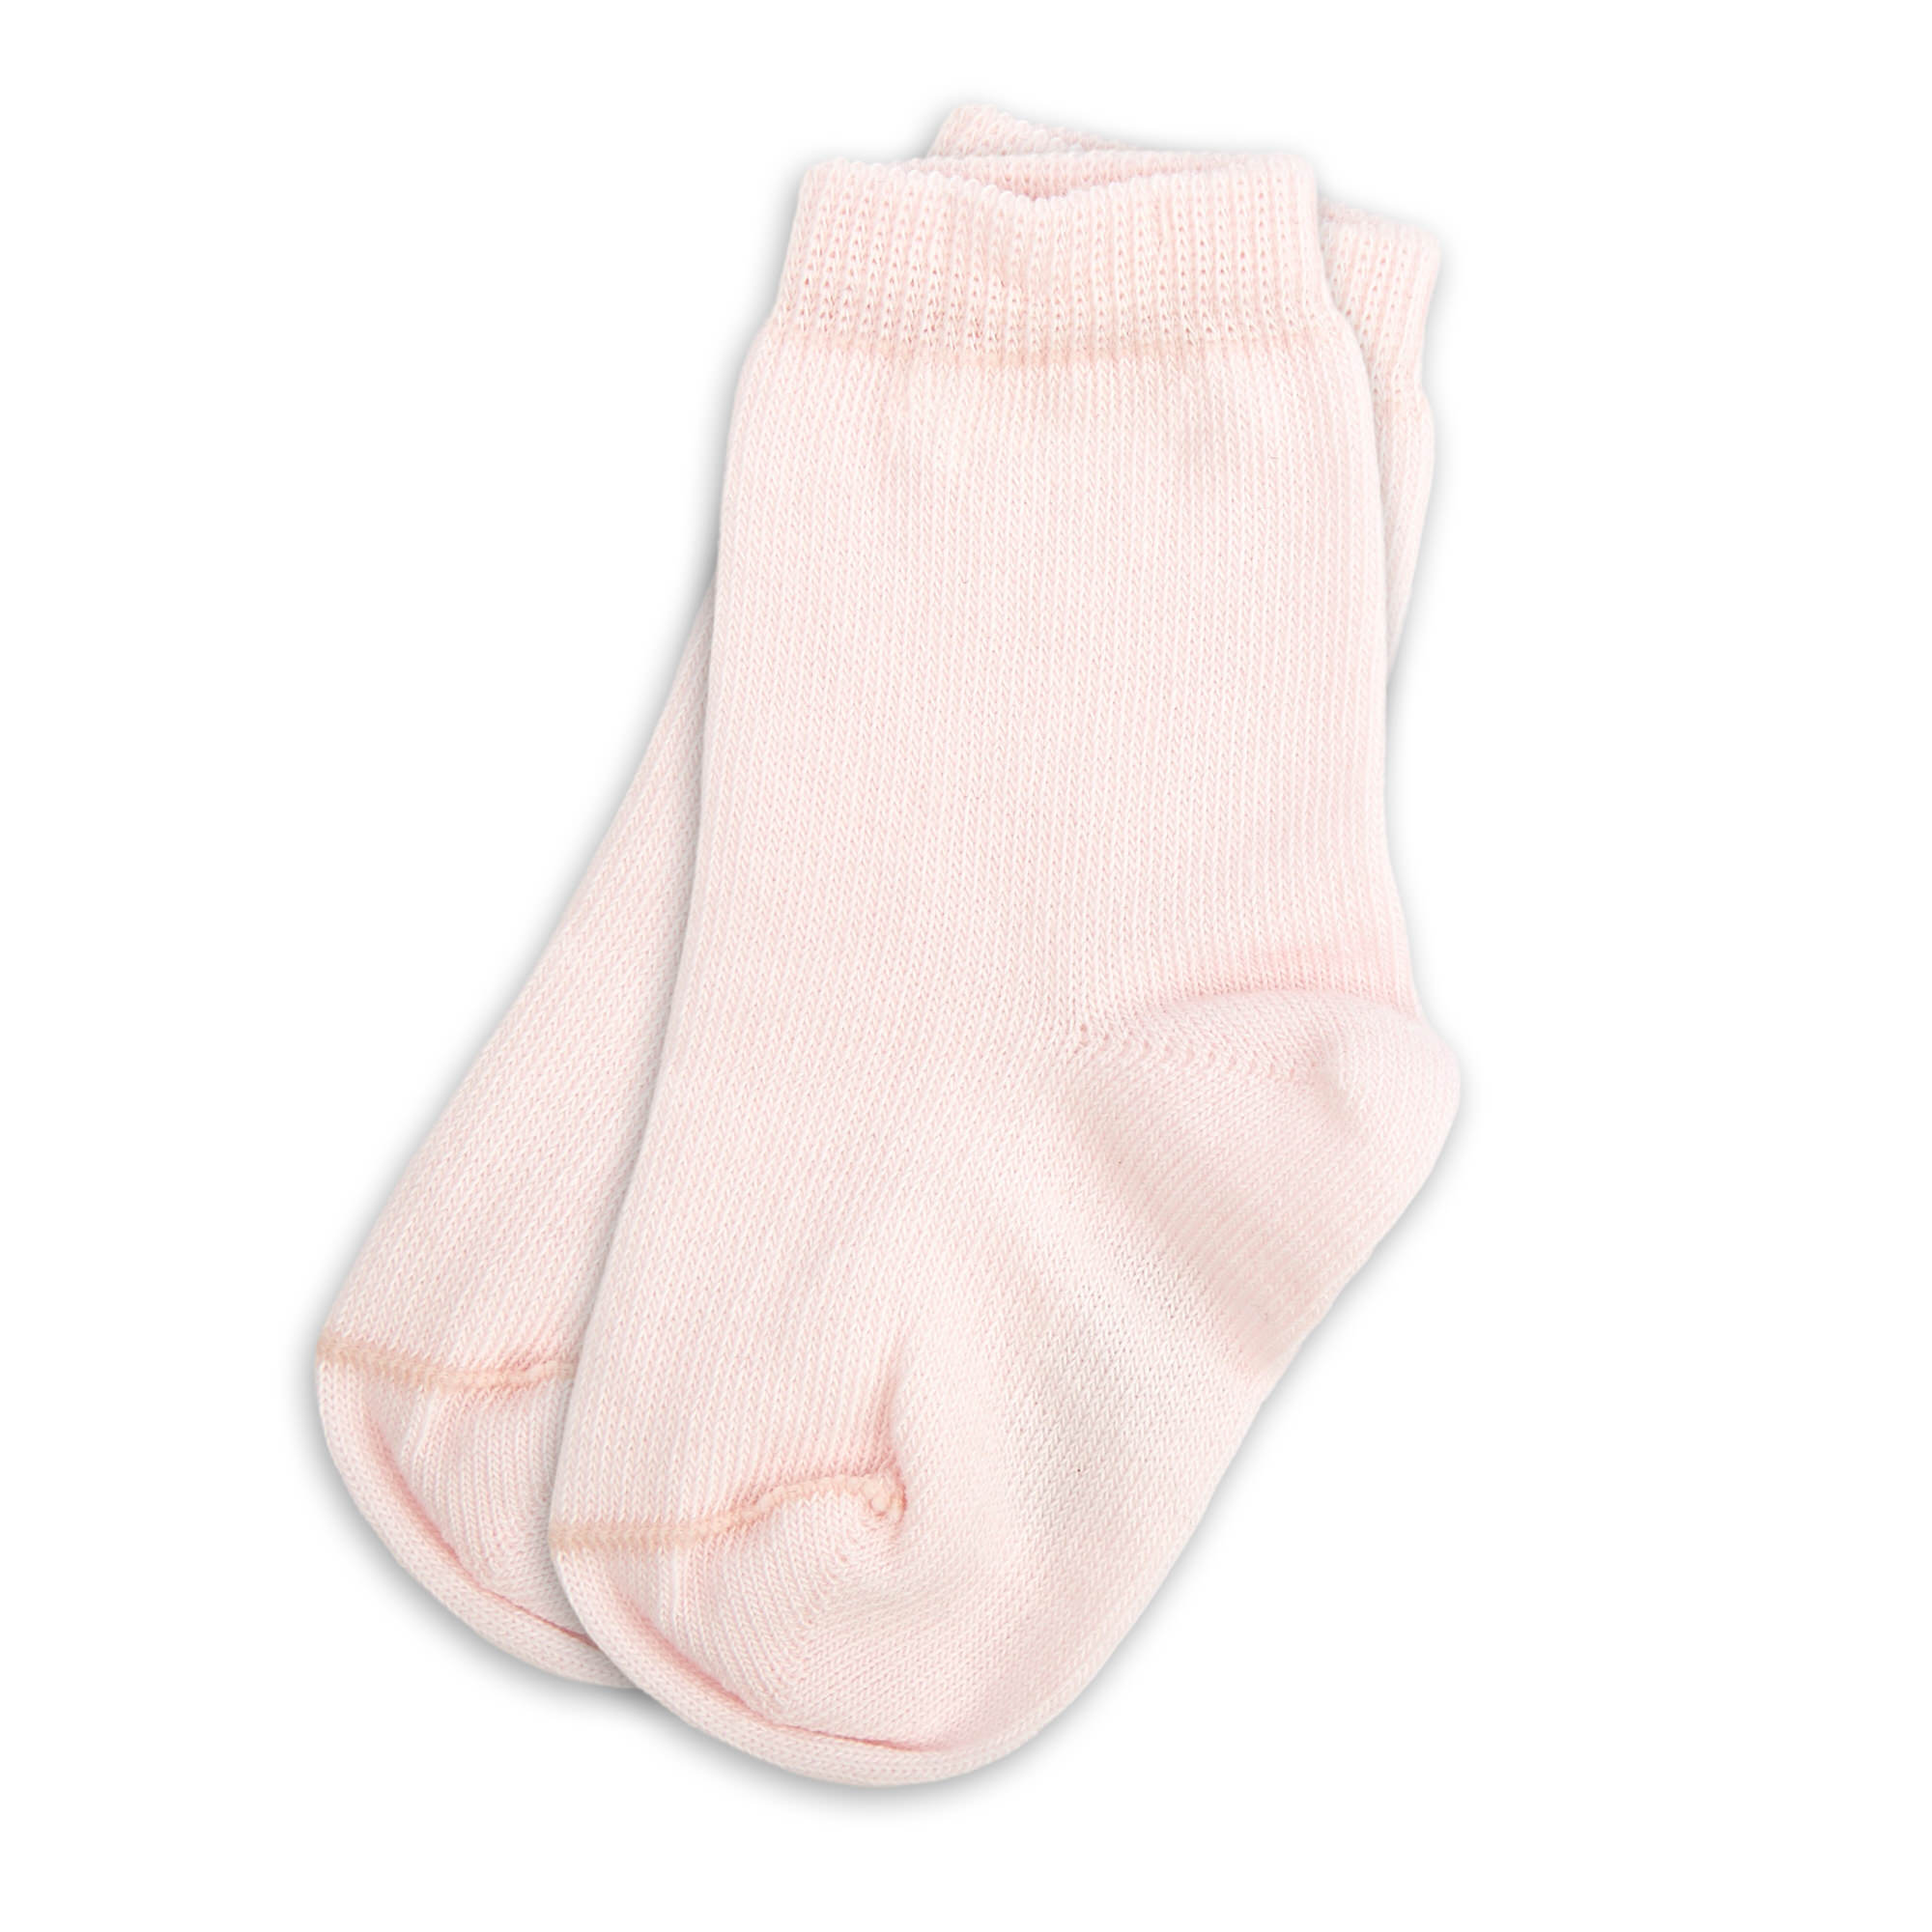 Baby socks pale pink